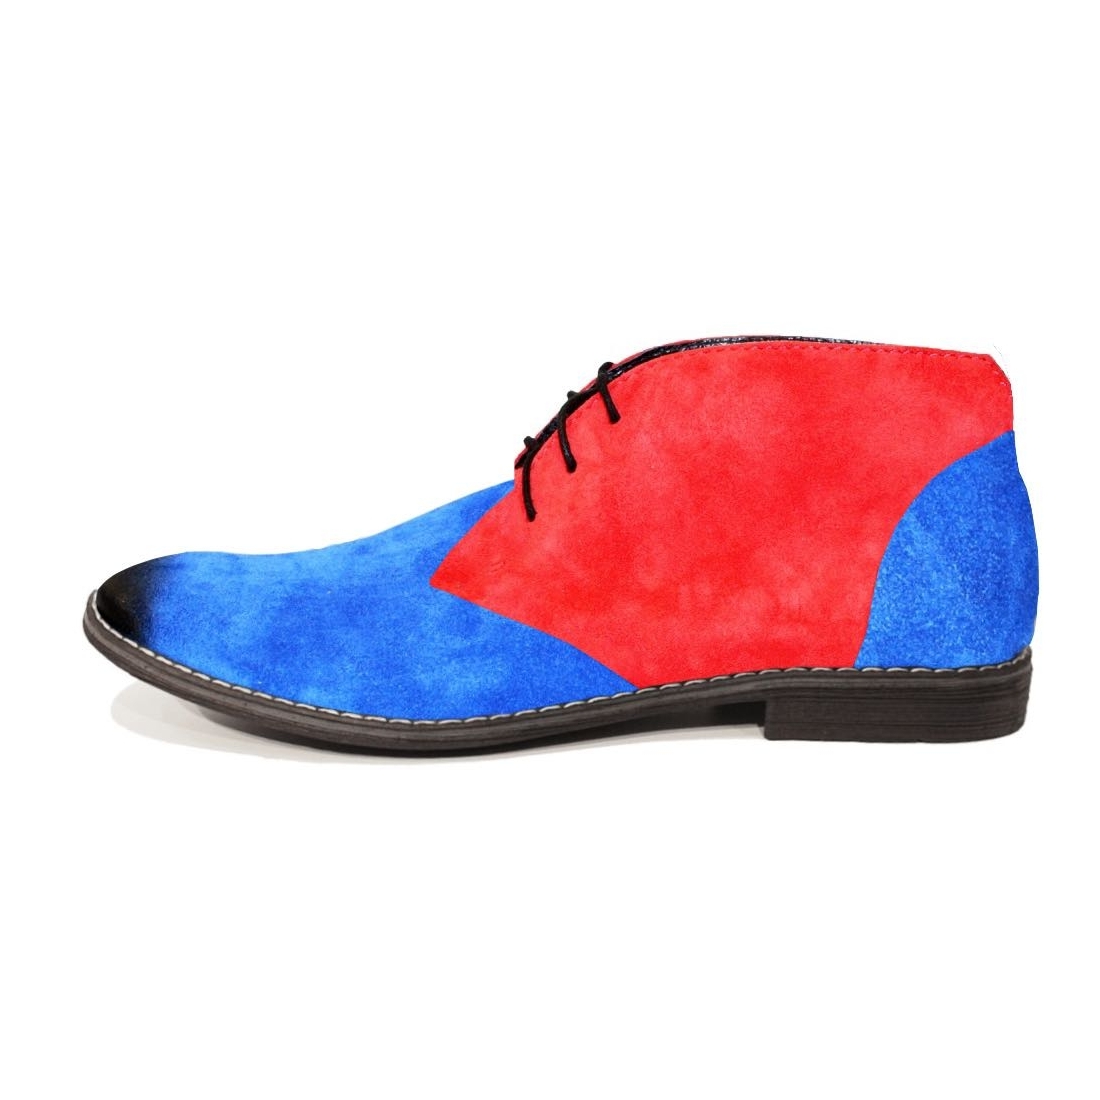 Modello Sterrer - Buty Chukka - Handmade Colorful Italian Leather Shoes